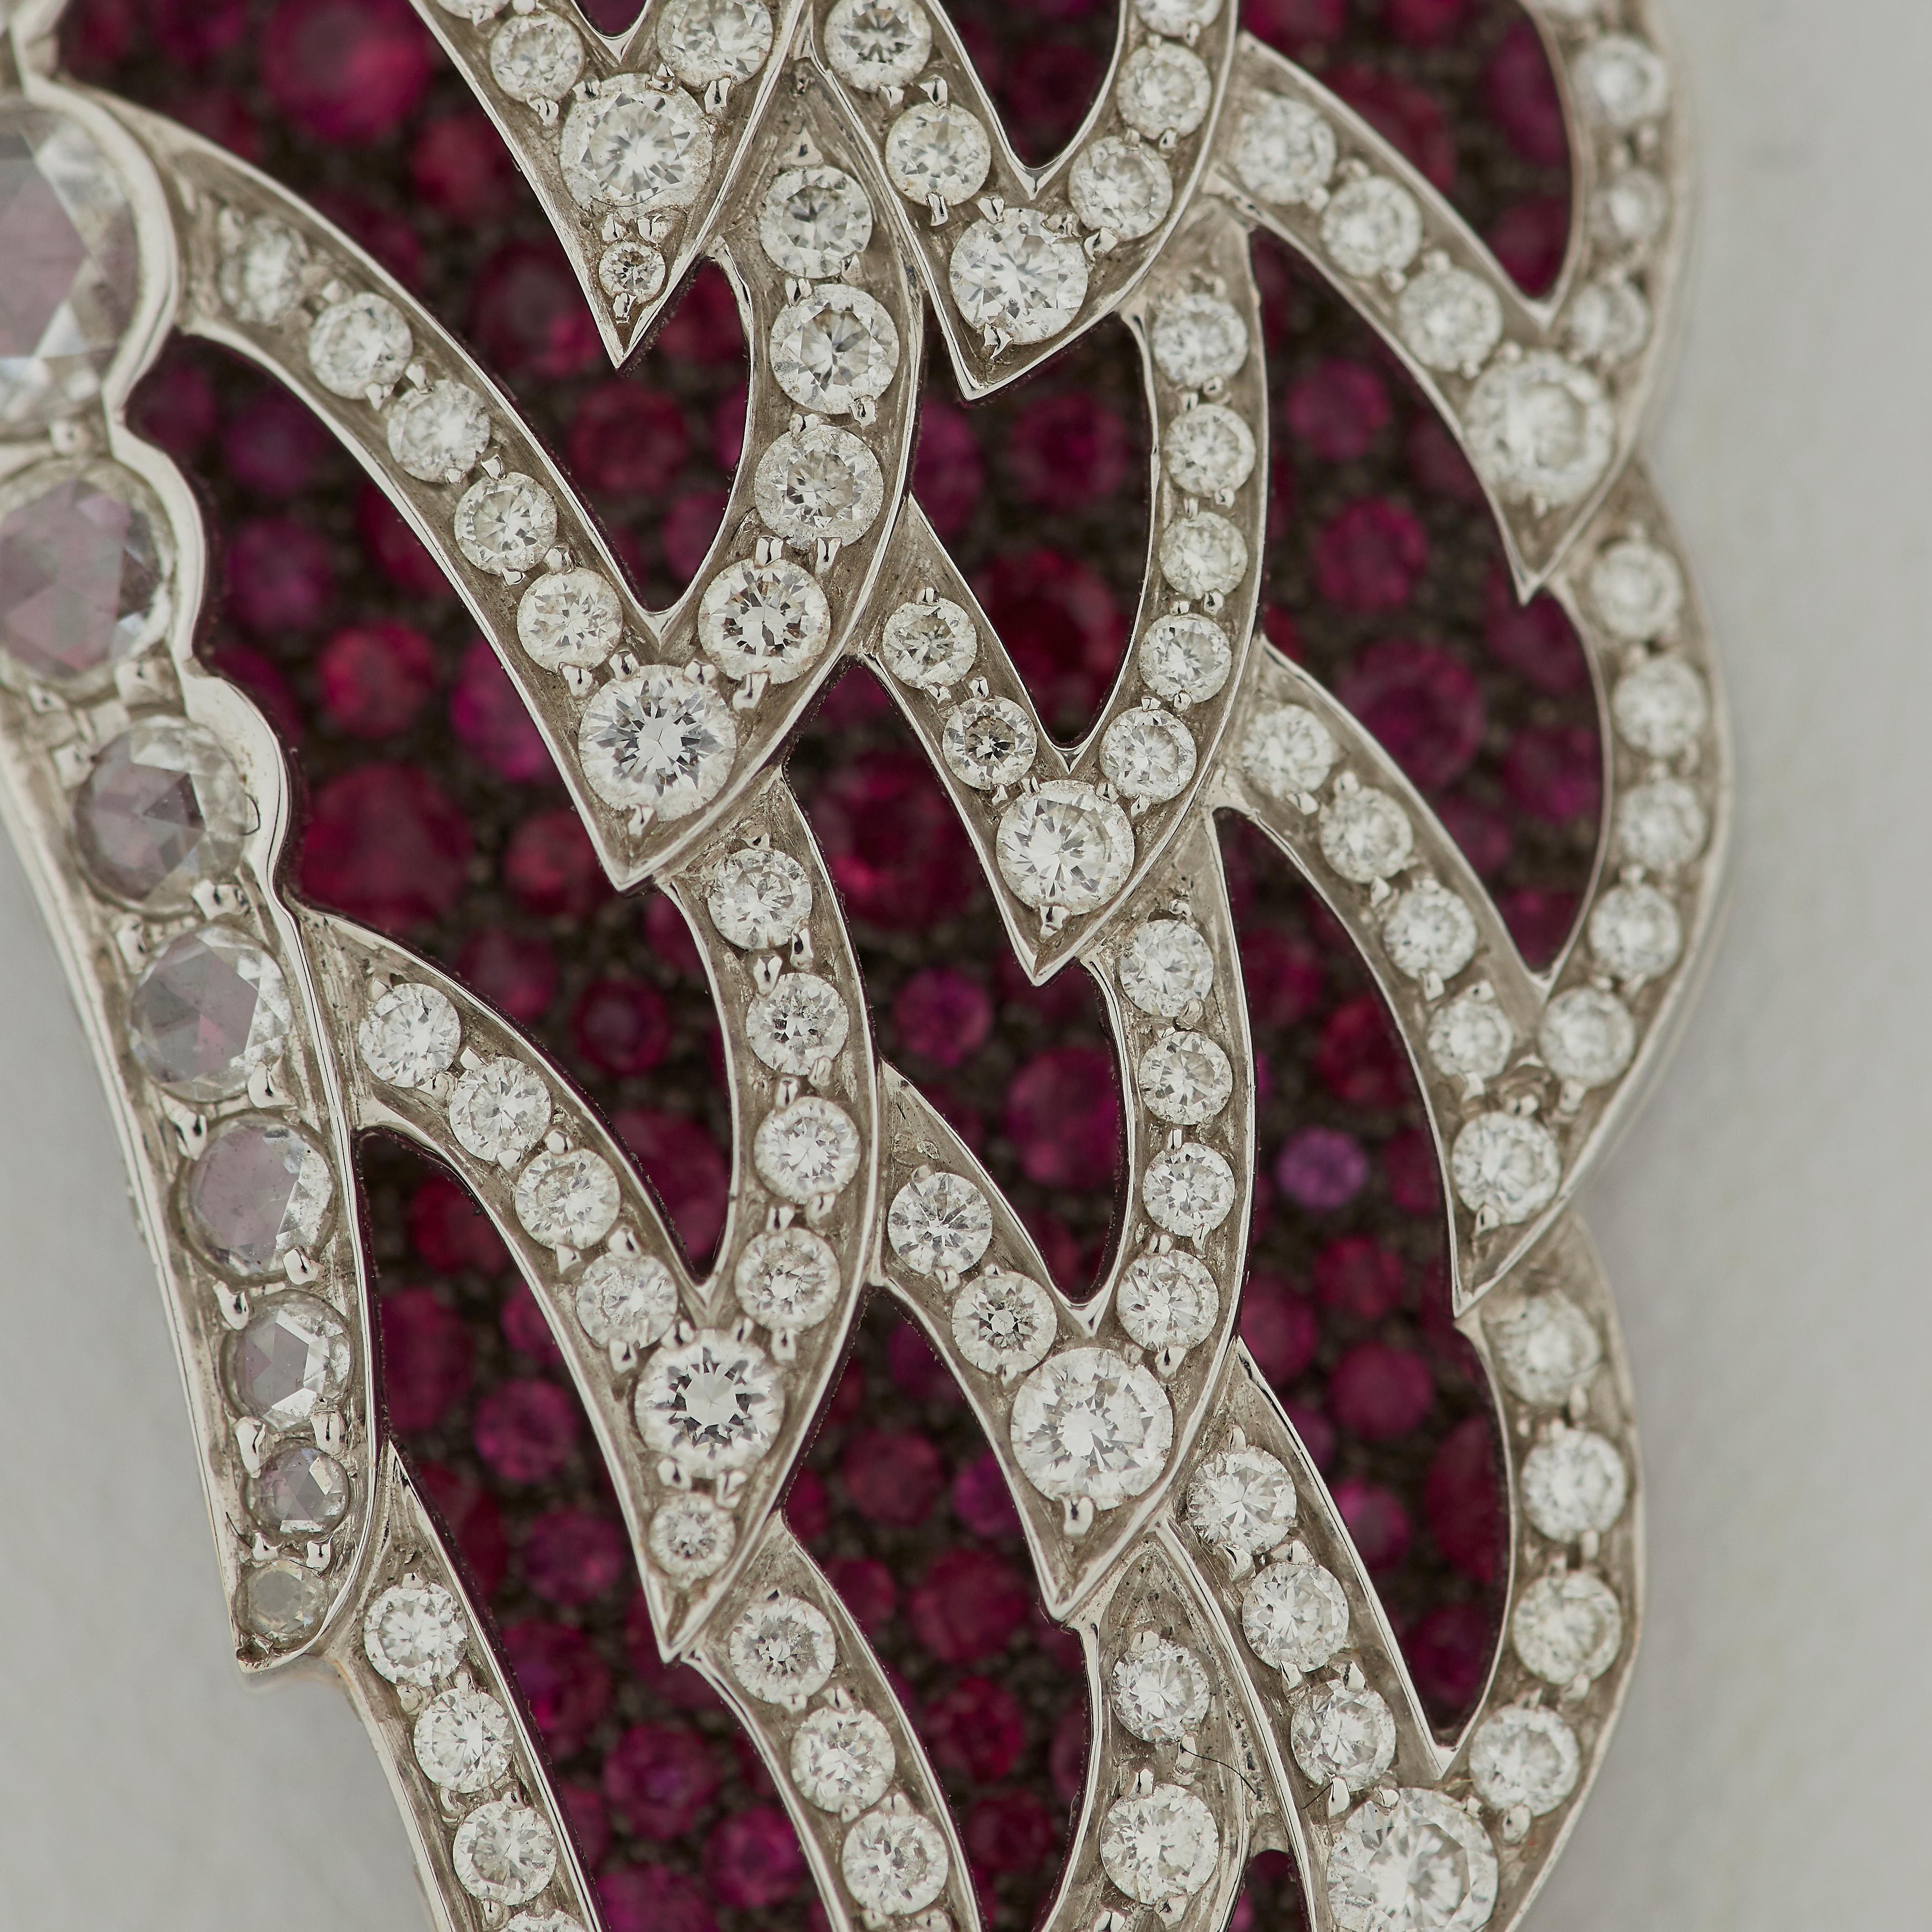 Garrard 'Wings Lace' 18 Karat White Gold Rose Cut Diamond and Ruby Drop Earrings For Sale 3